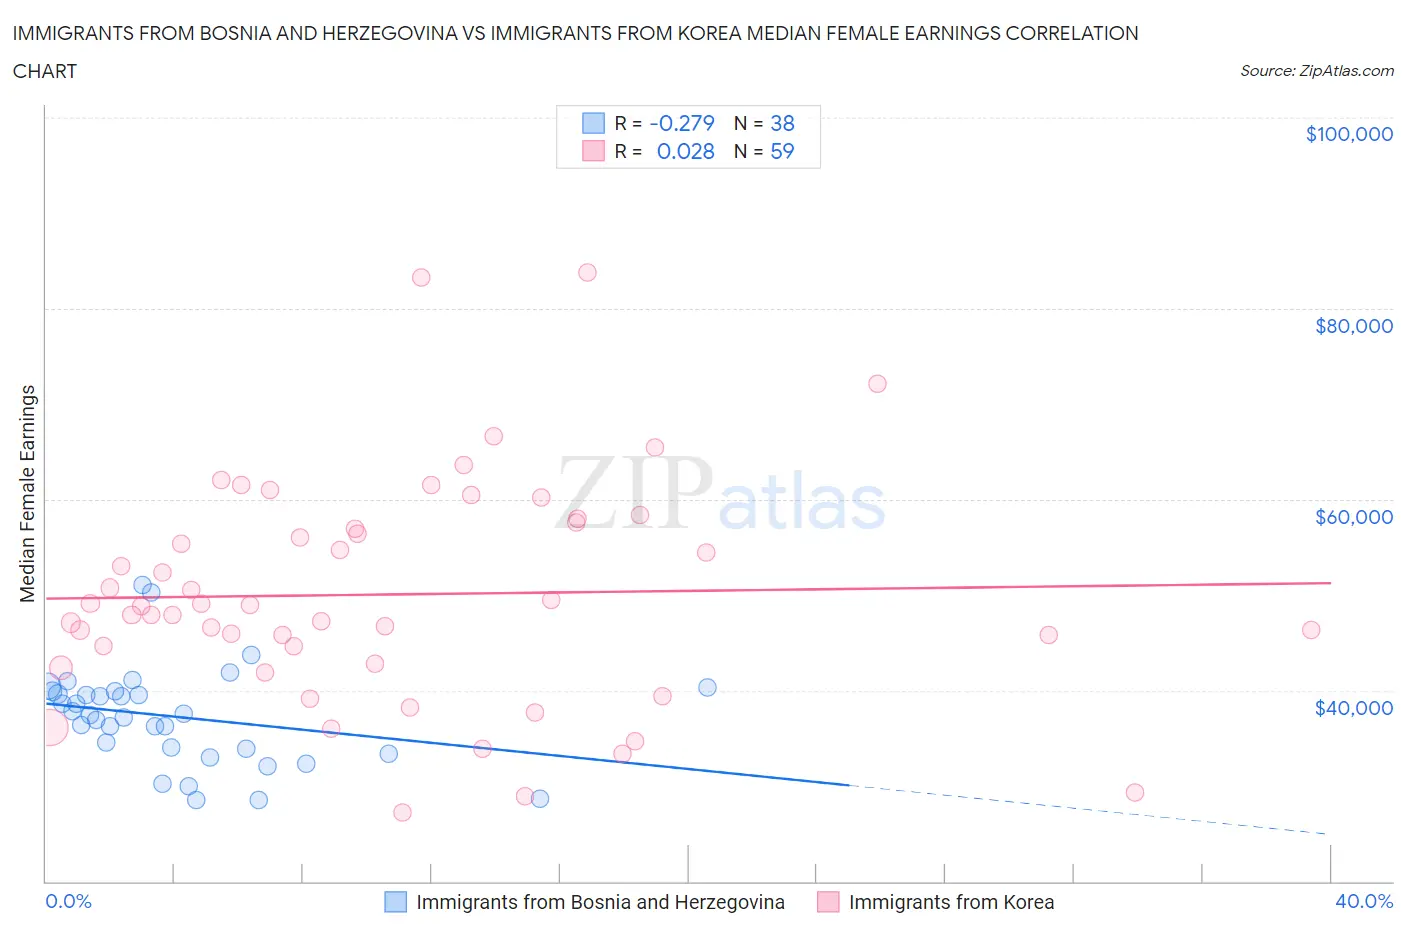 Immigrants from Bosnia and Herzegovina vs Immigrants from Korea Median Female Earnings